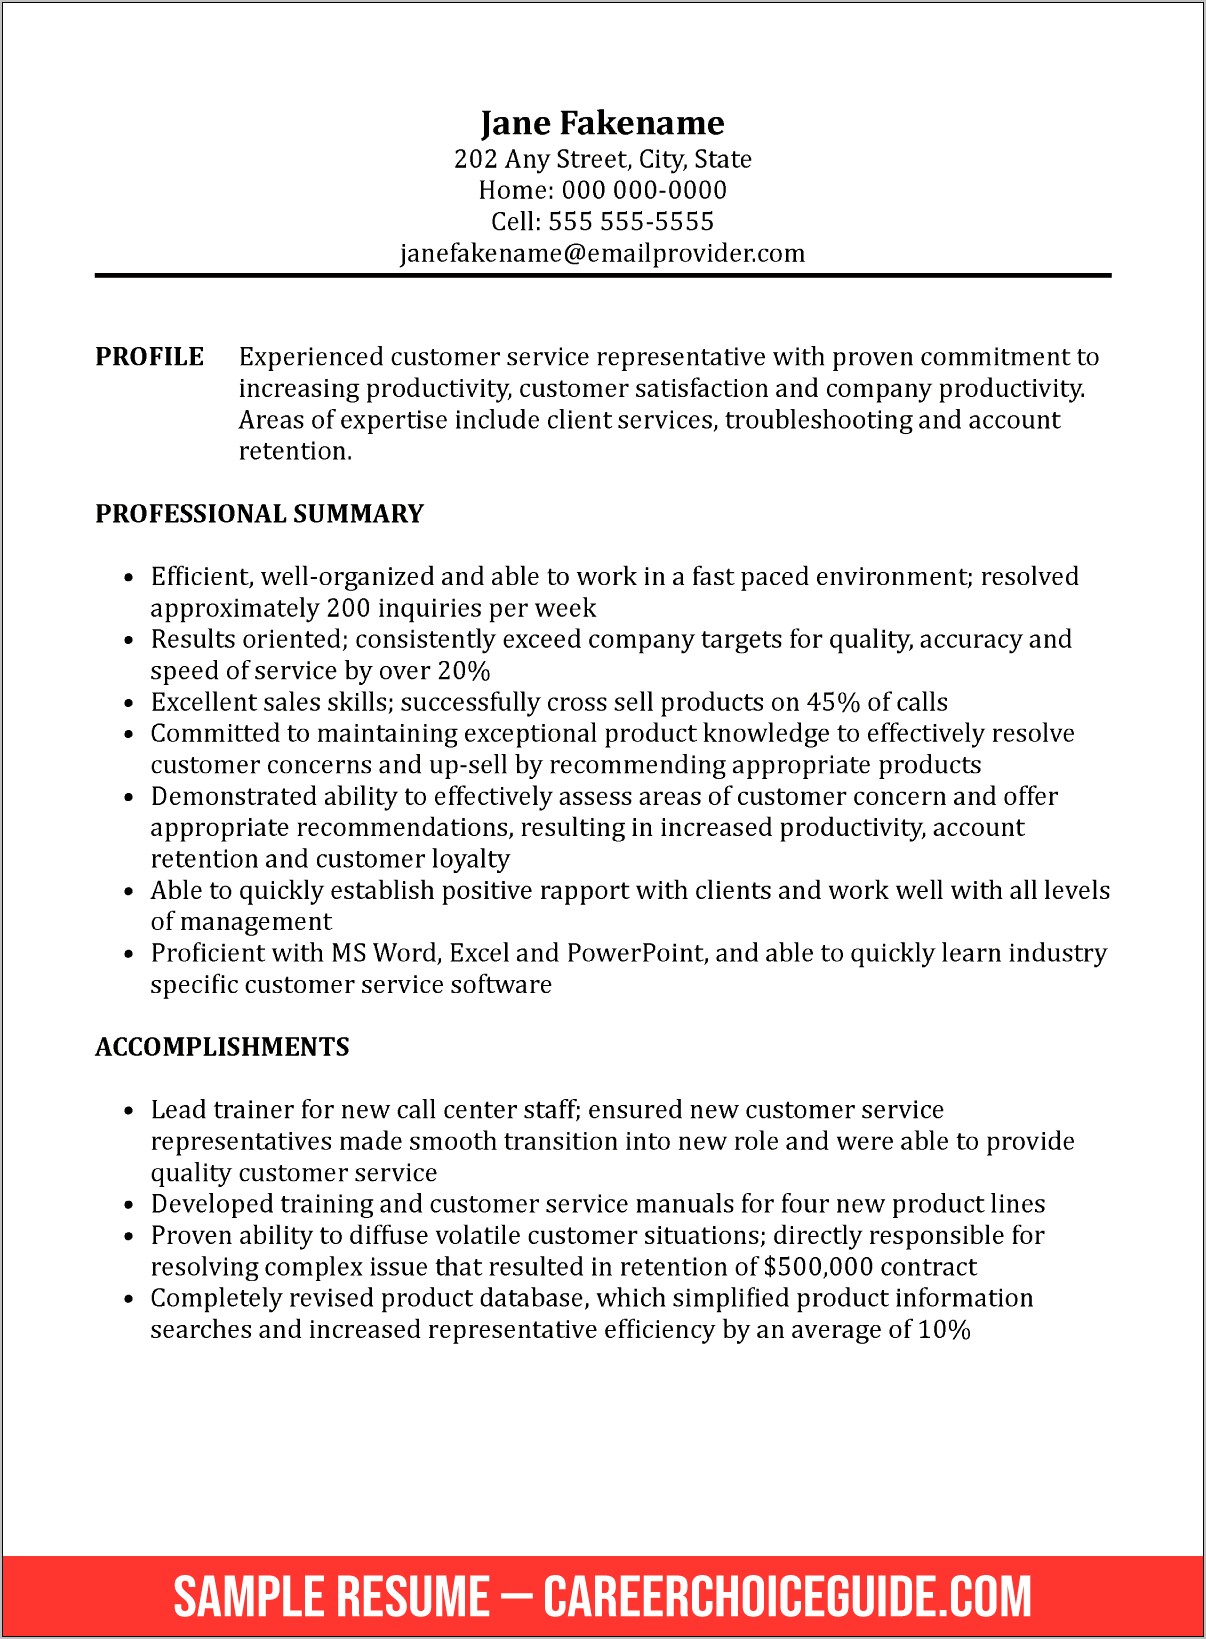 Resume Job Description Customer Service